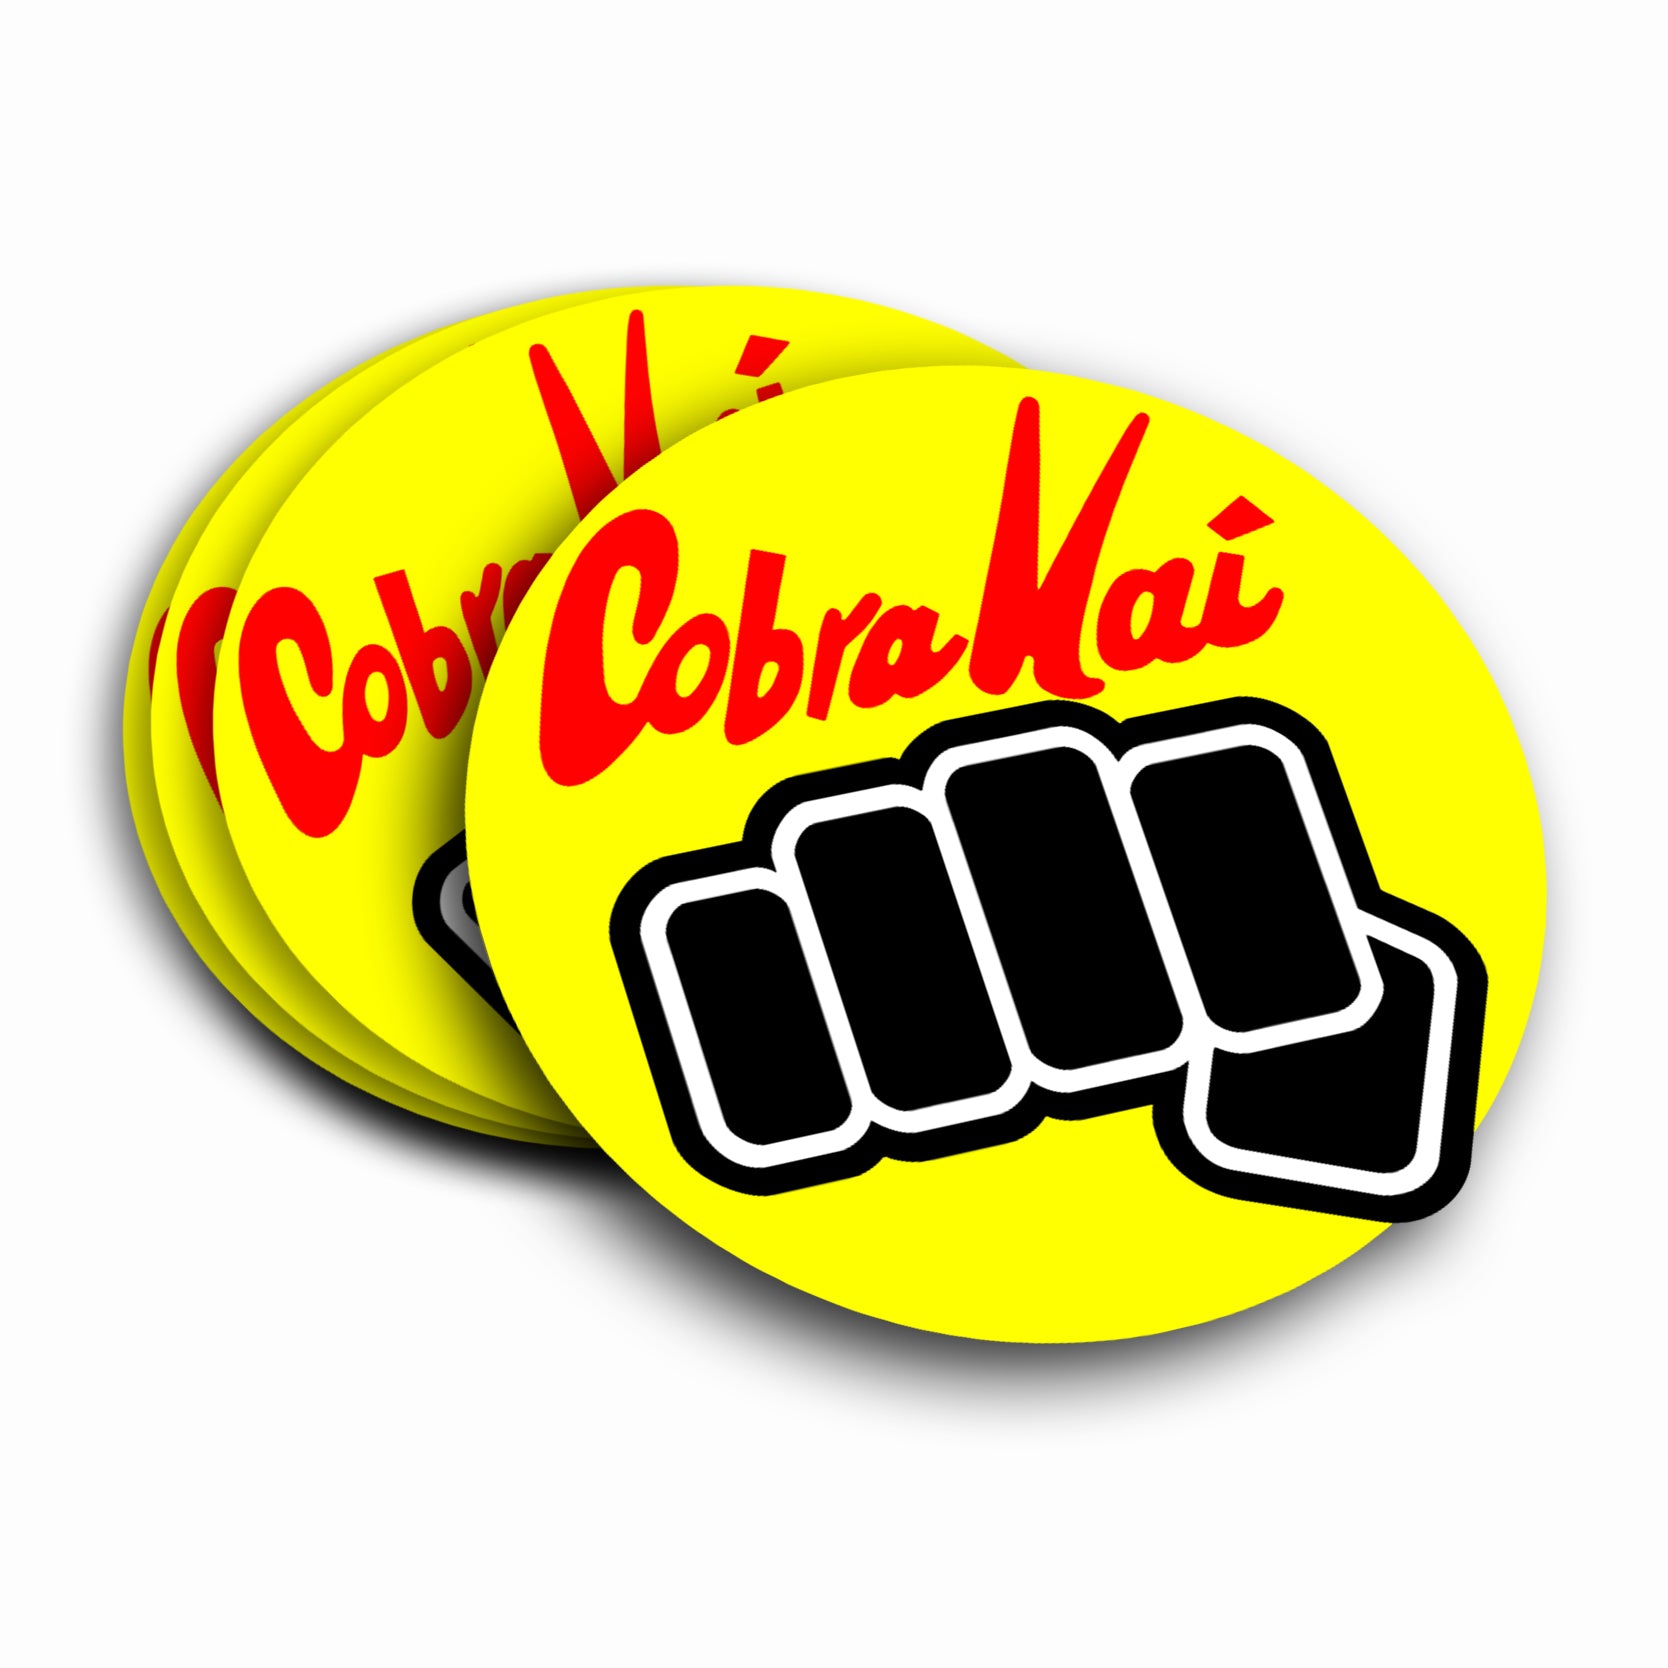 Cobra Kai Patch Sticker